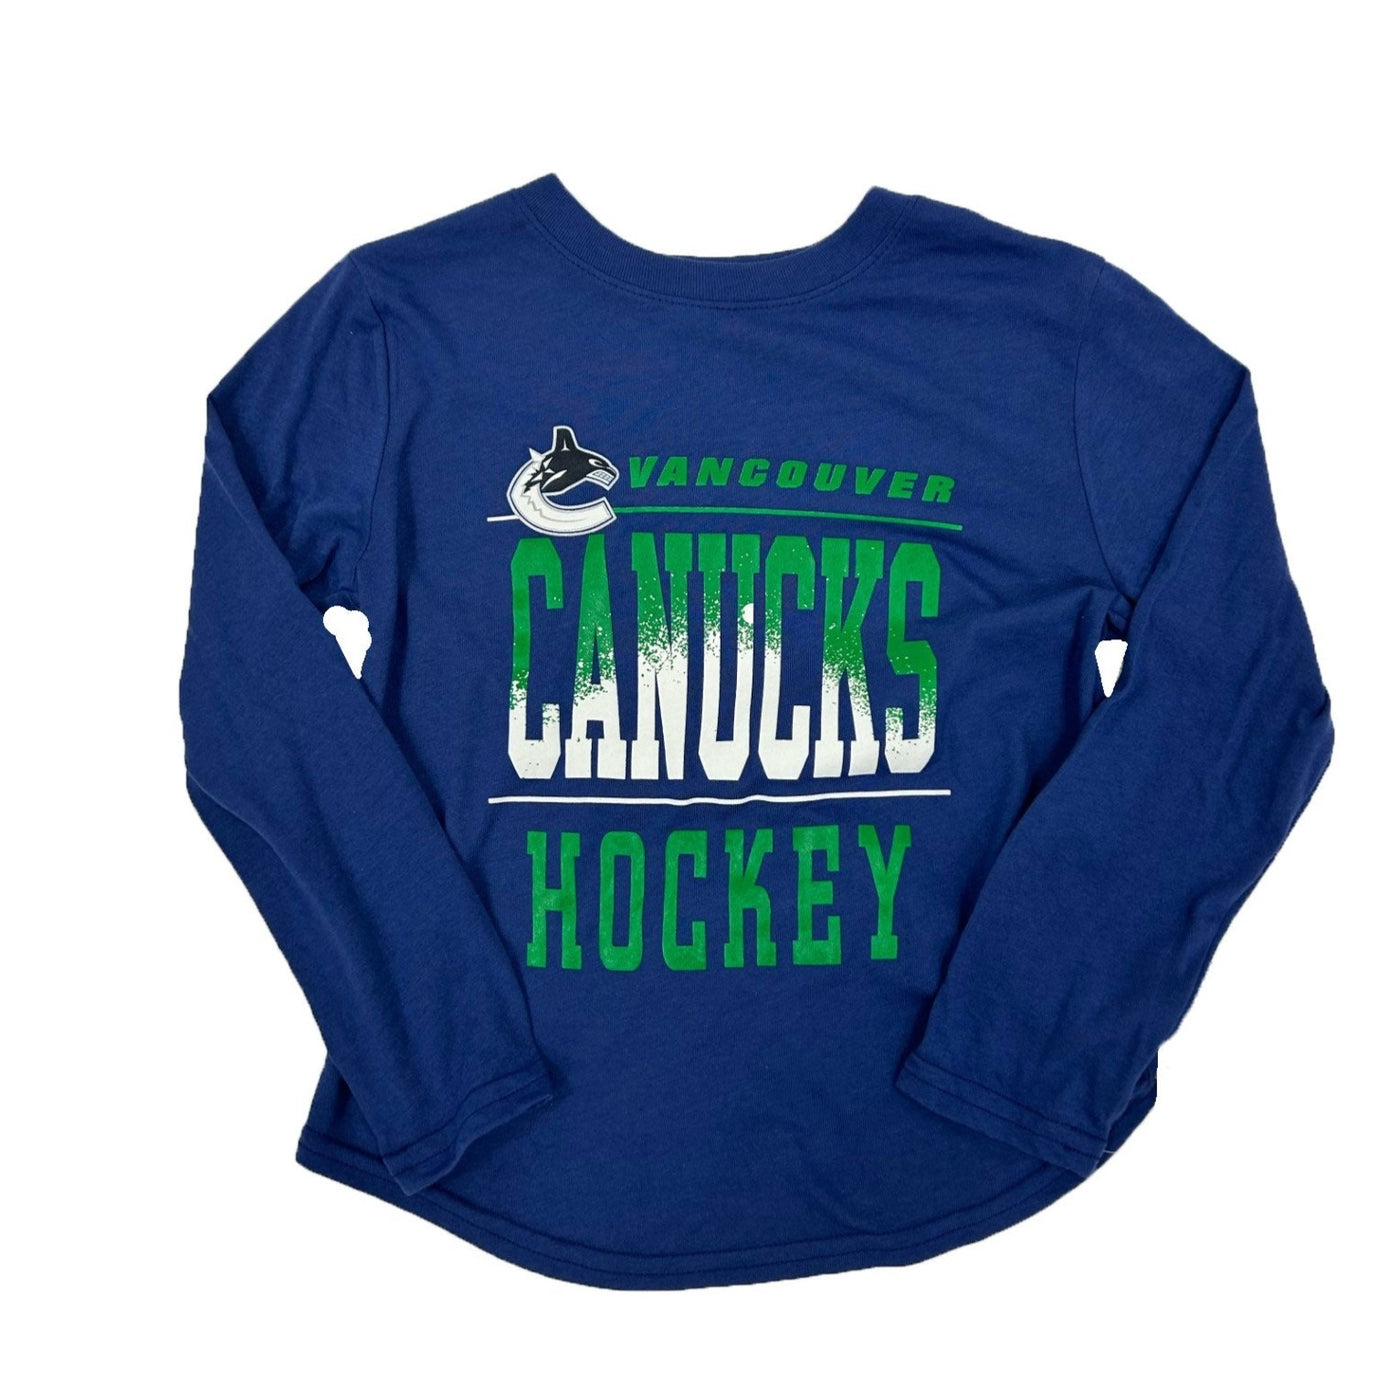 Outer Stuff Barnburner Youth Longsleeve Shirt - Vancouver Canucks - TheHockeyShop.com